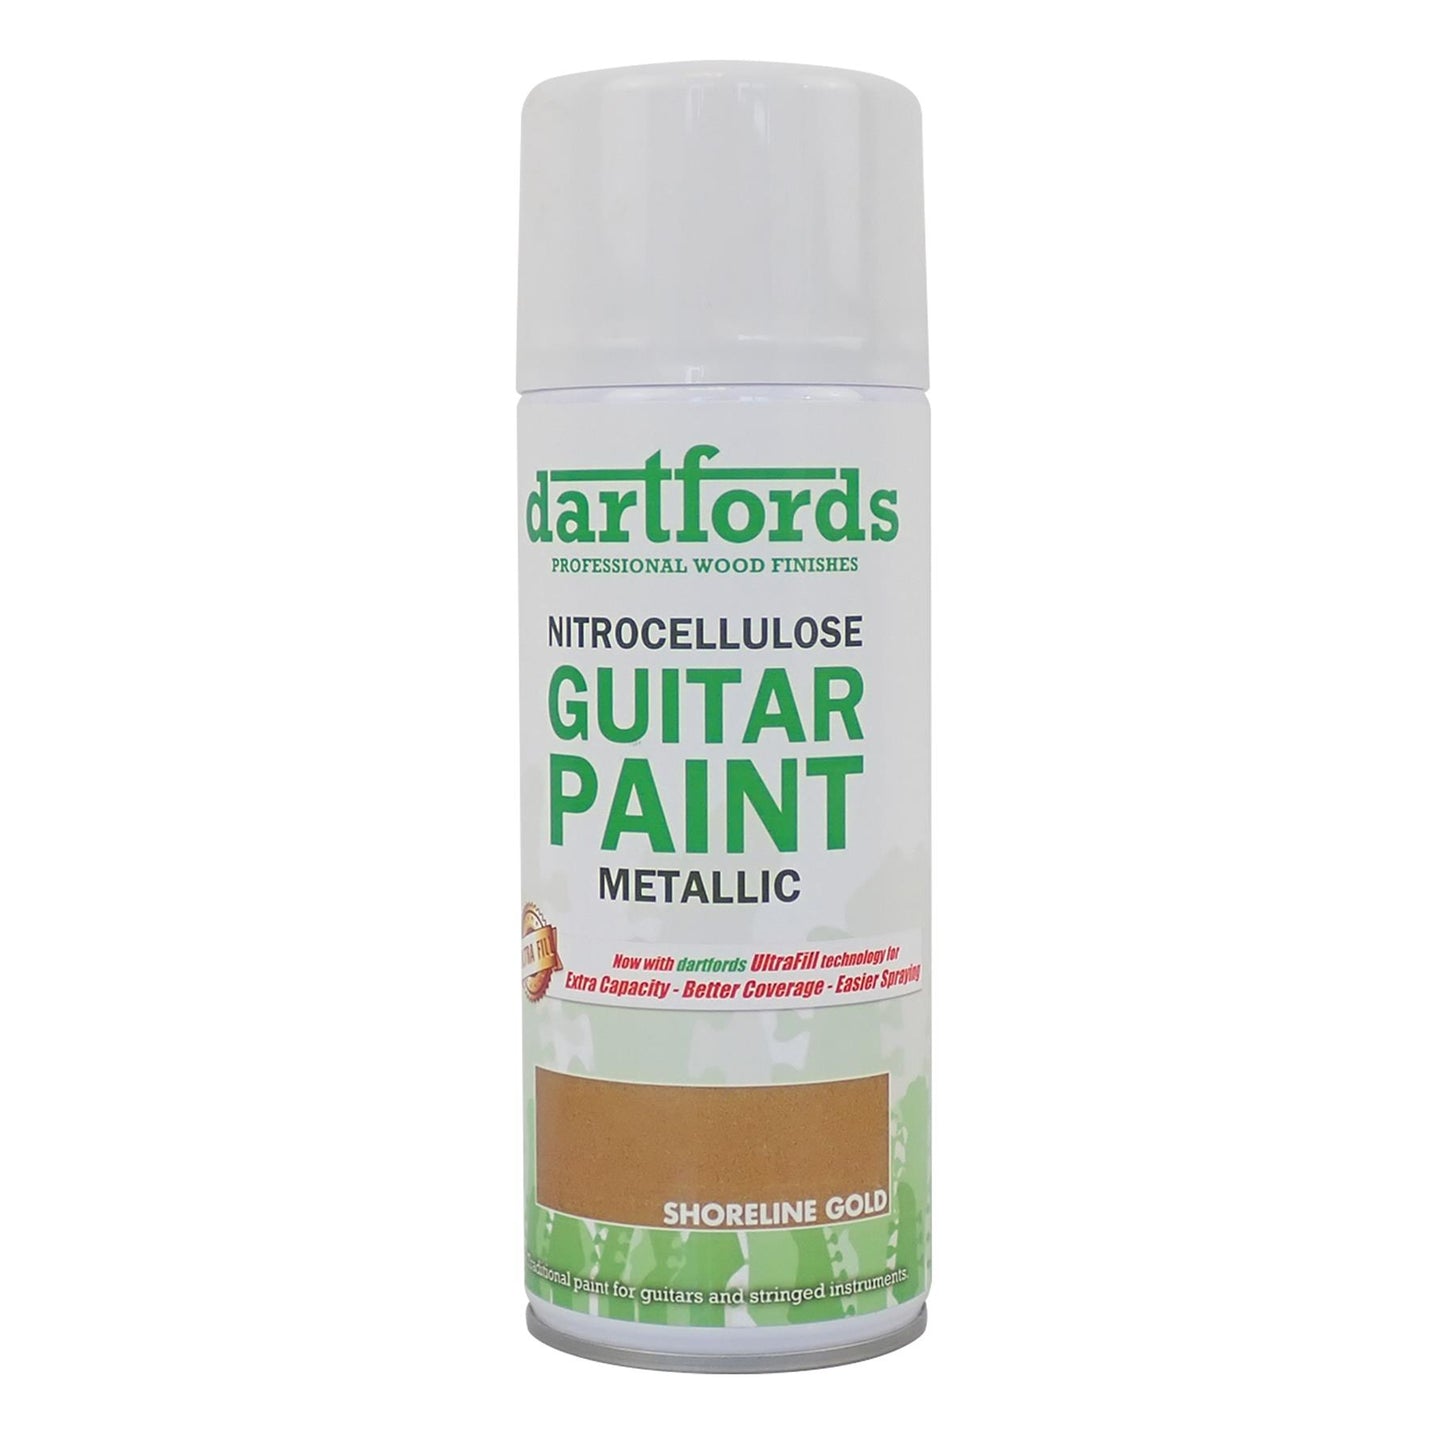 dartfords Shoreline Gold Metallic Nitrocellulose Guitar Paint - 400ml Aerosol